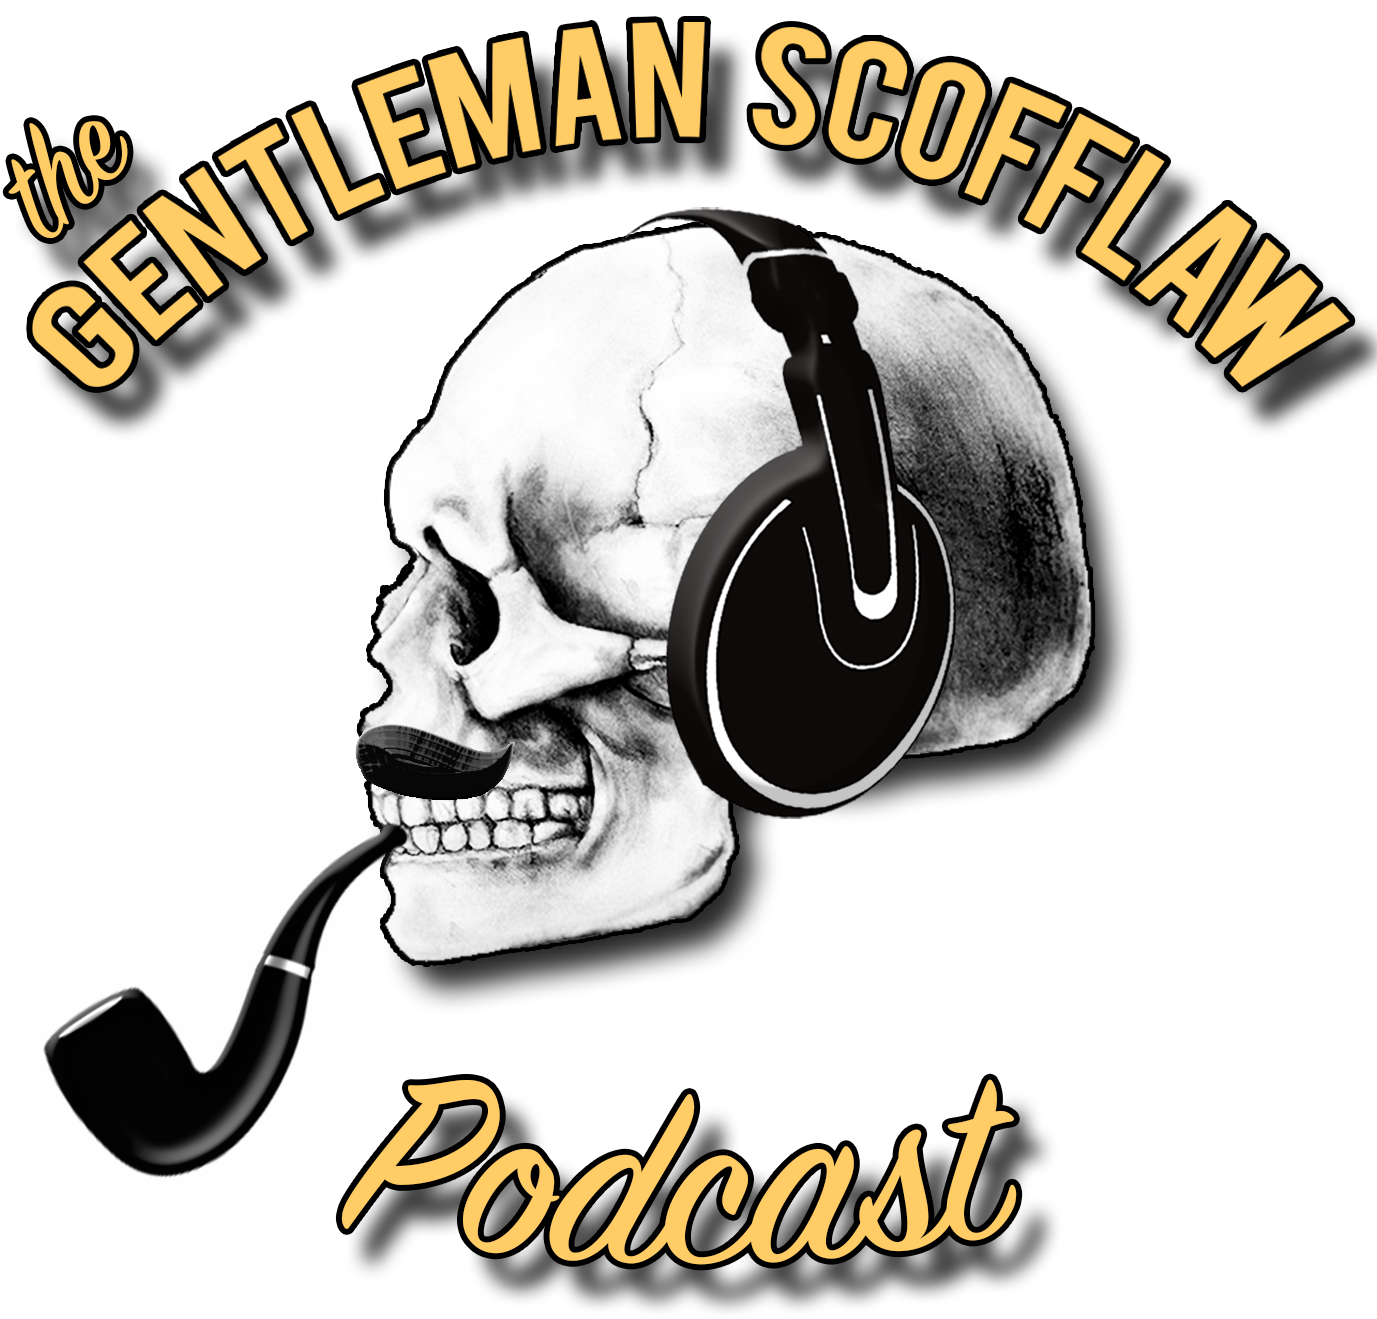 The Gentleman Scofflaw Podcast